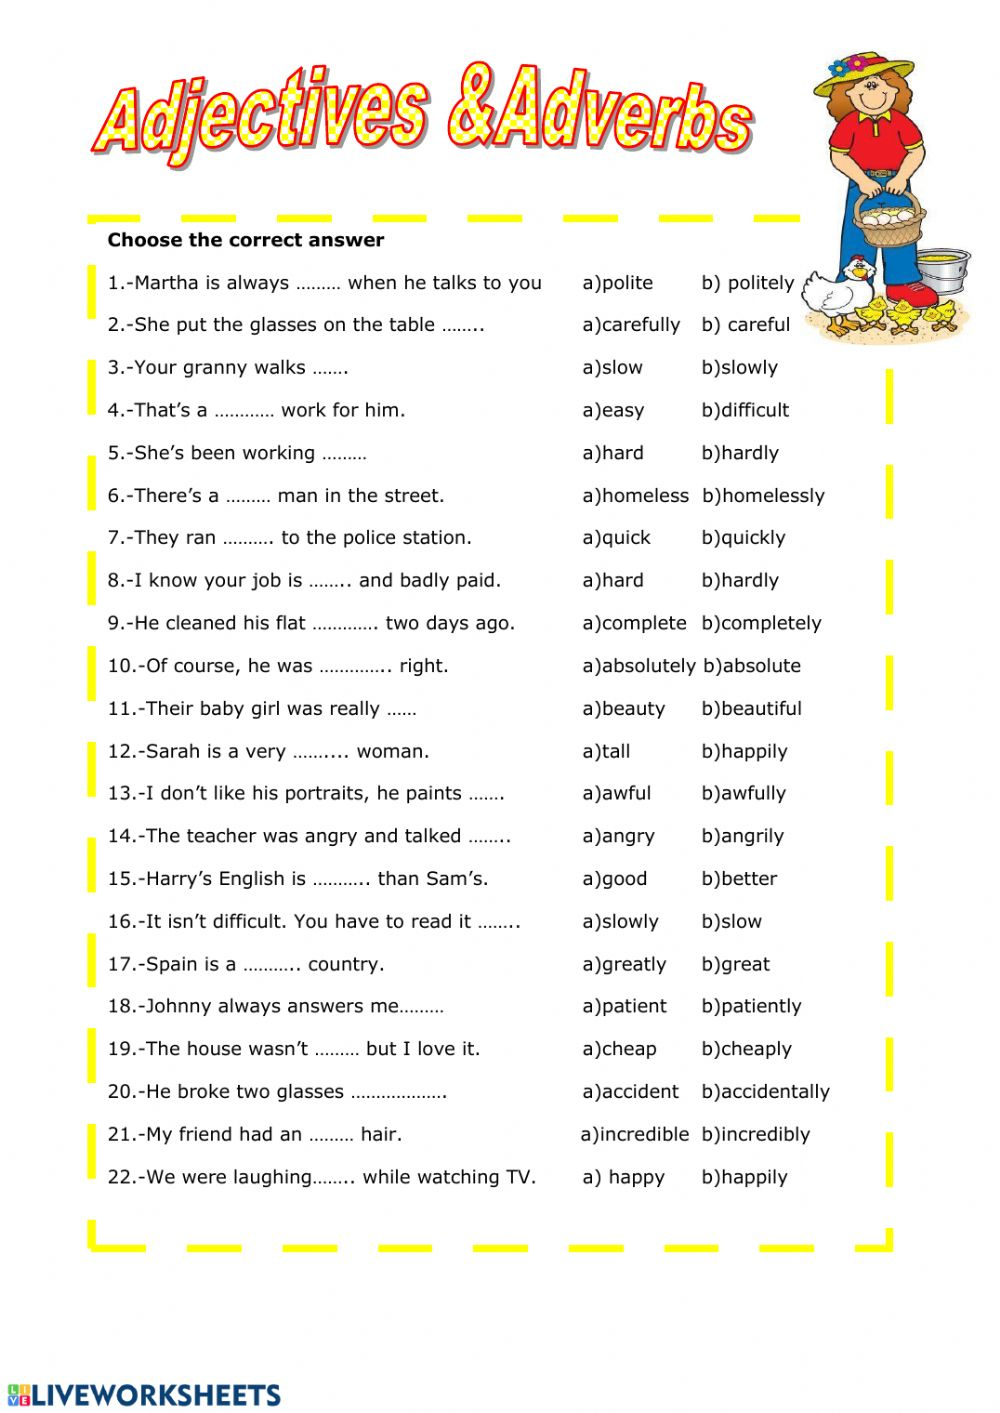 adjectives-and-adverbs-worksheets-for-grade-3-adverbworksheets